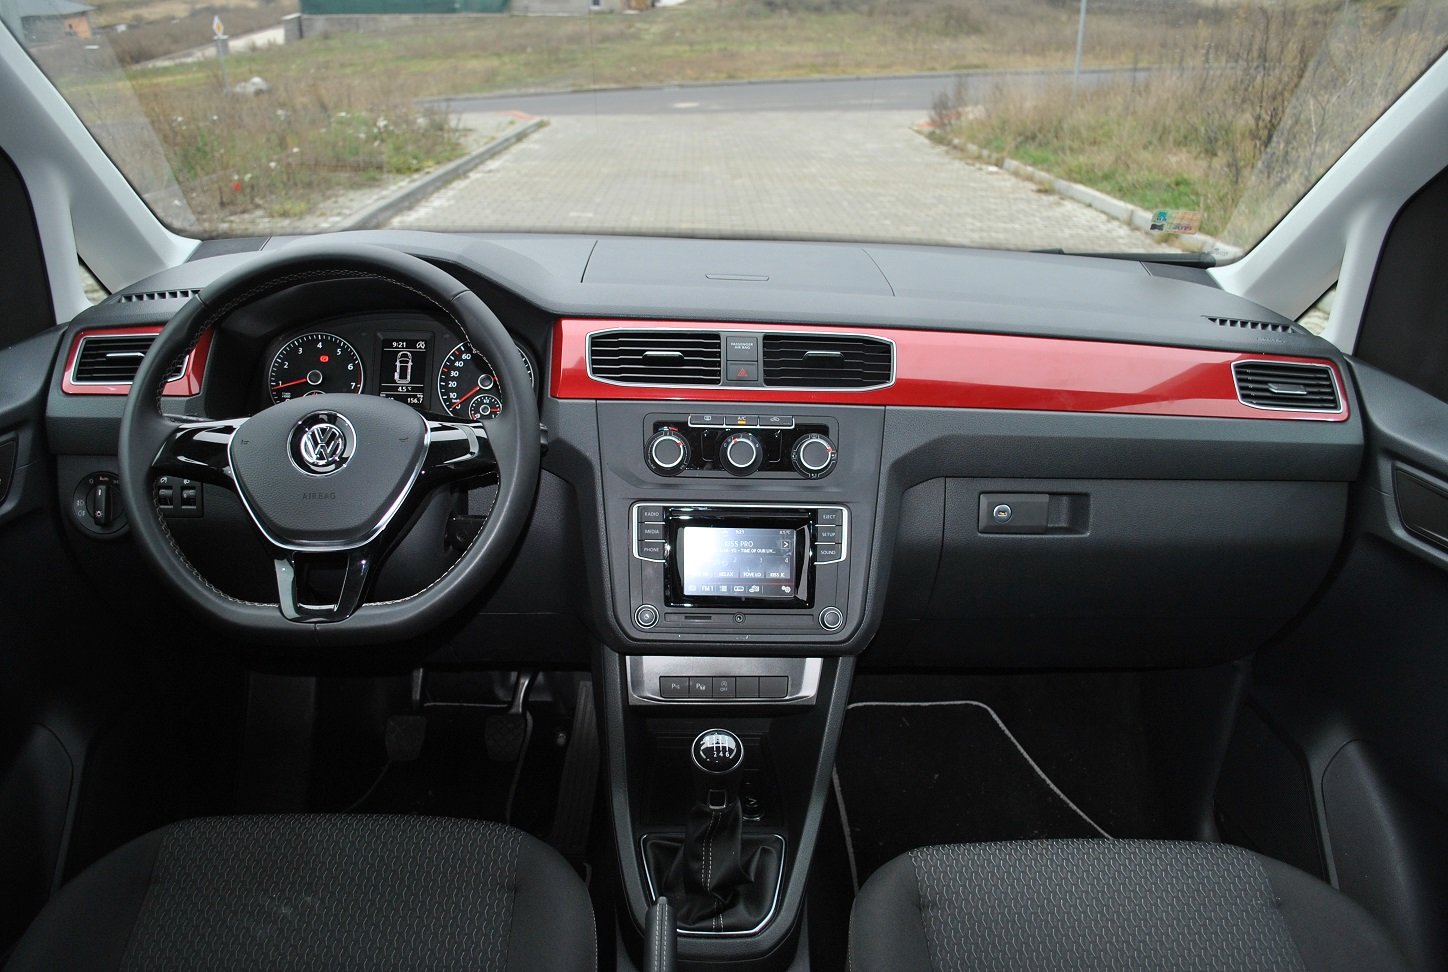 Volkswagen Caddy 1.4 TSI Generation Four